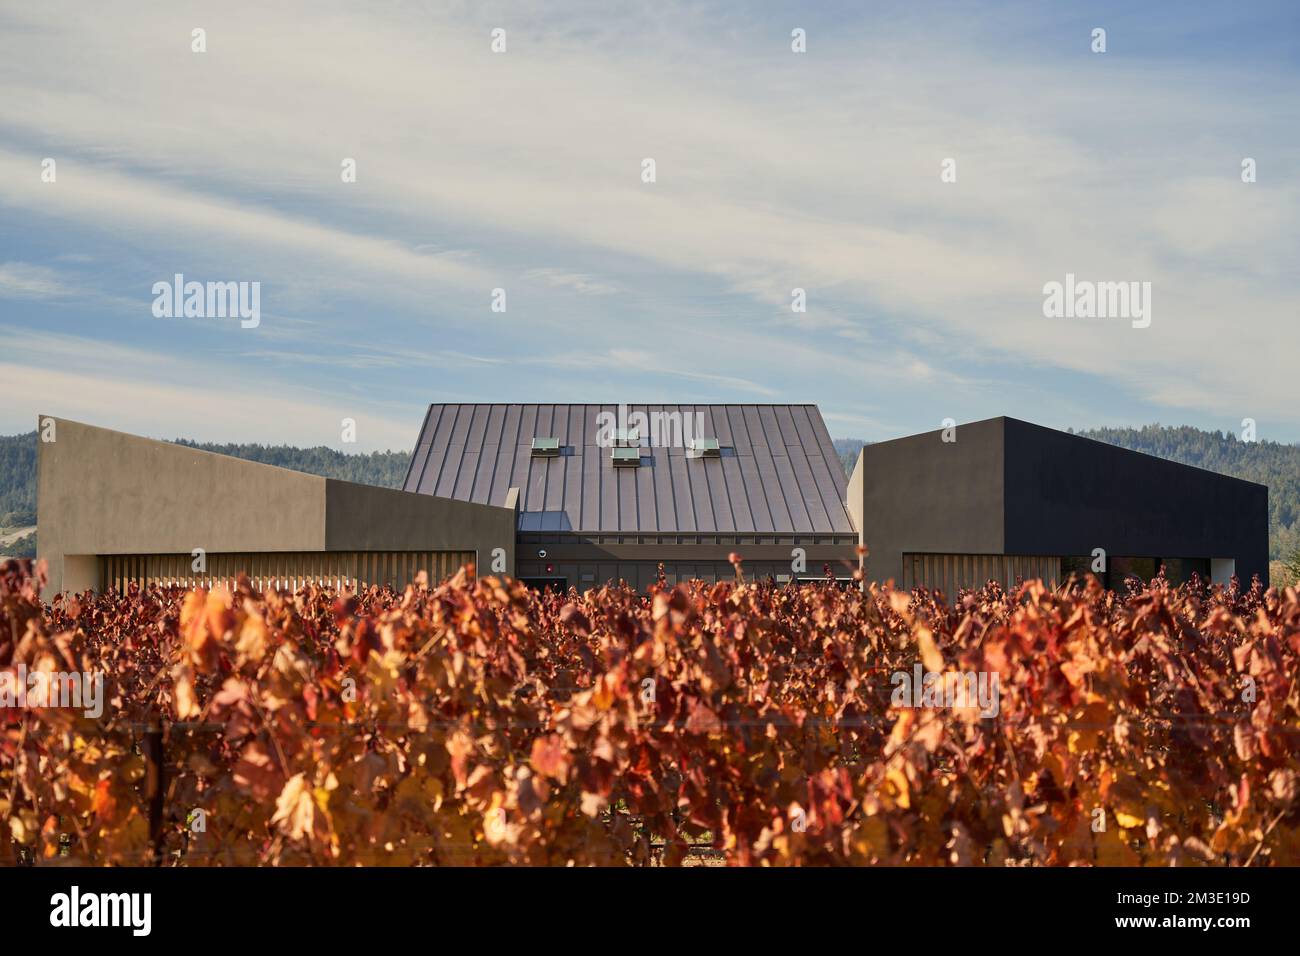 Aperture Cellars winery building and vineyard in autumn in rural Healdsburg, California. Stock Photo